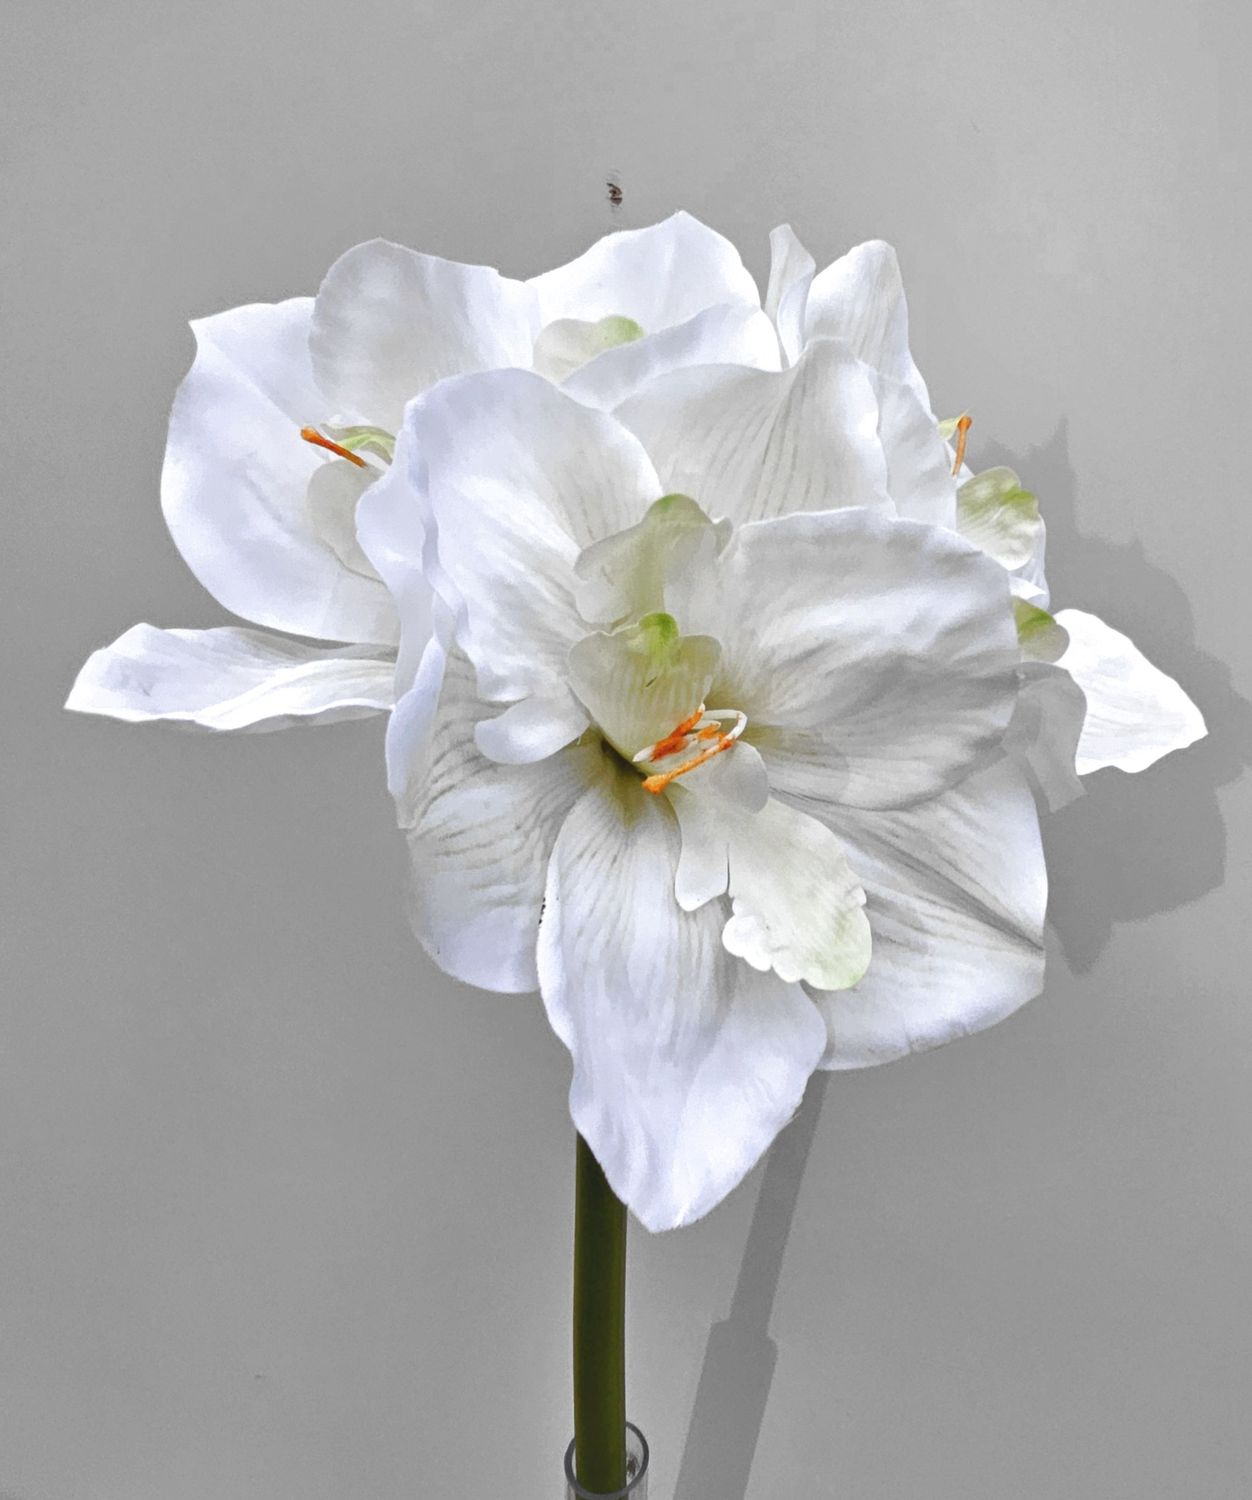 Amaryllis artificiale "Deluxe", 61 cm, bianco crema